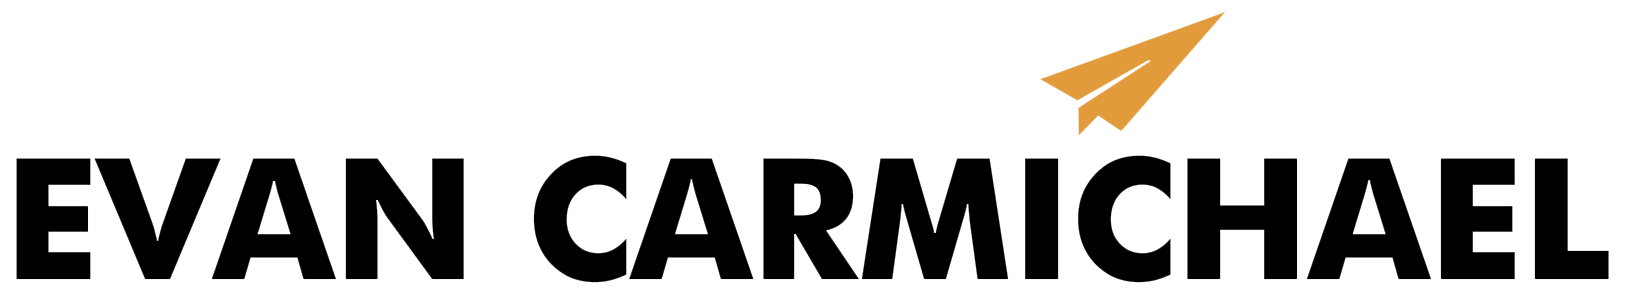 Evan Carmichael Logo